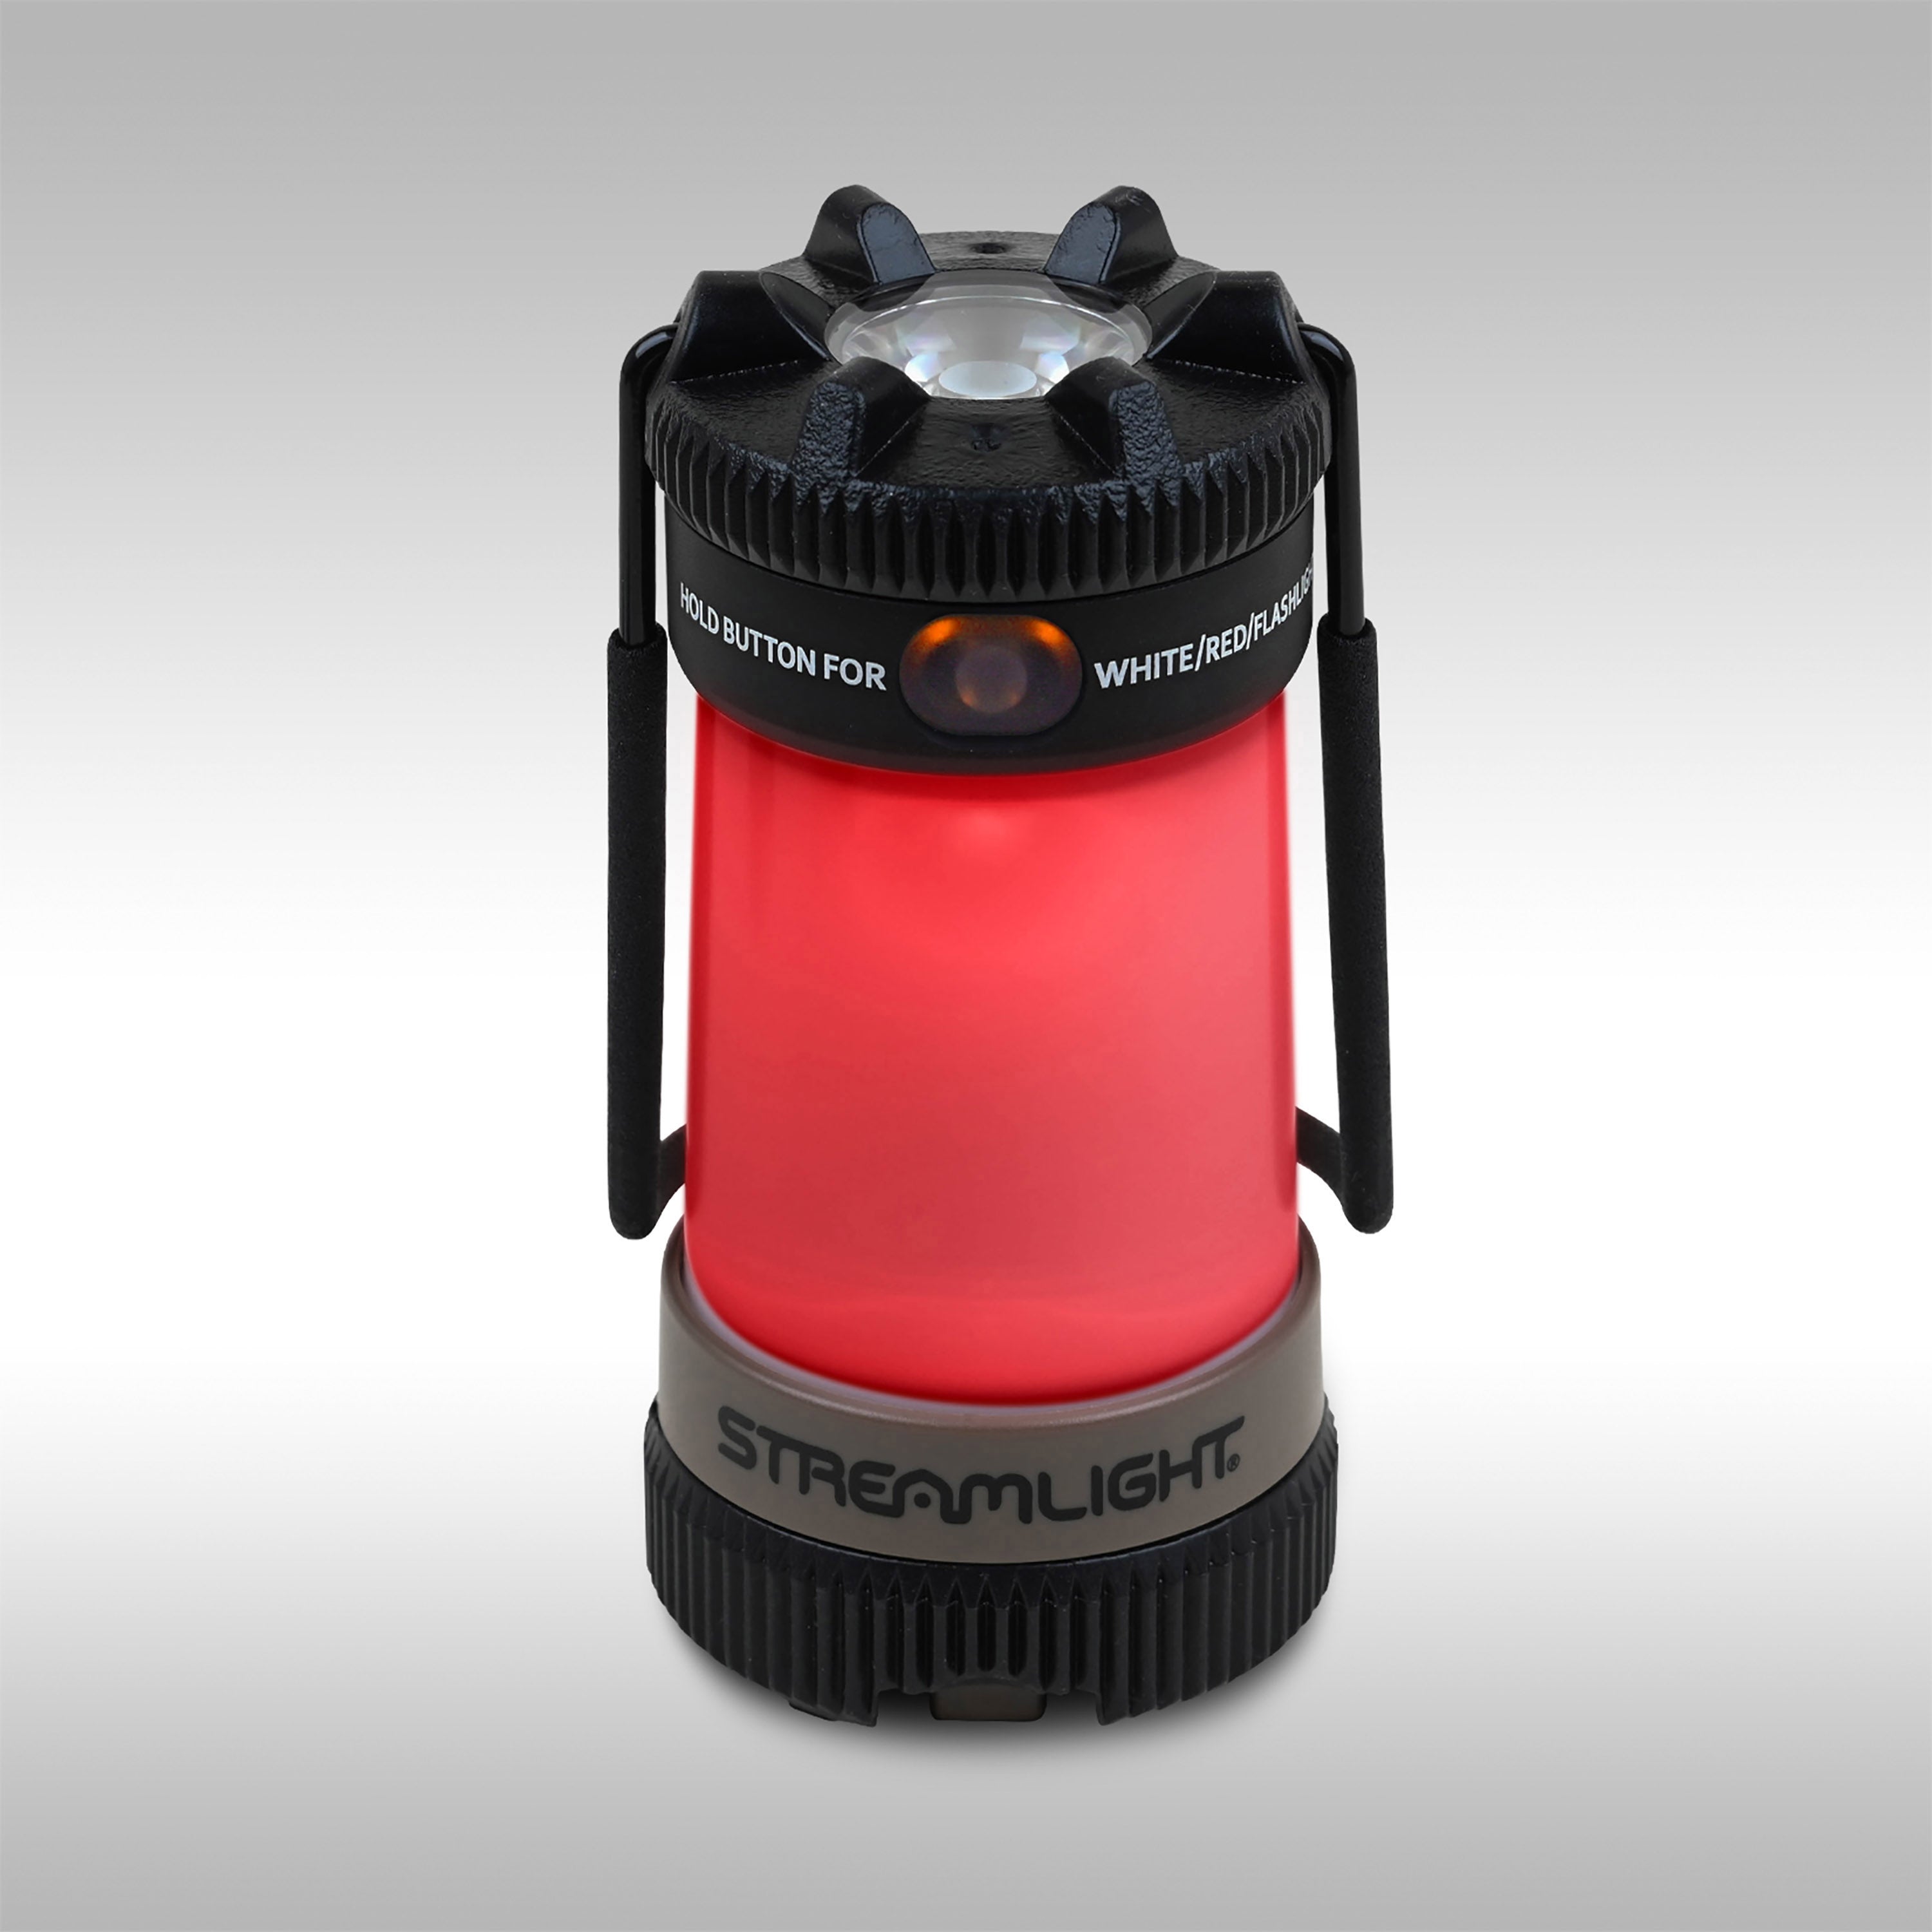 Streamlight Siege X Ultra - Compact 18650-usb Lantern